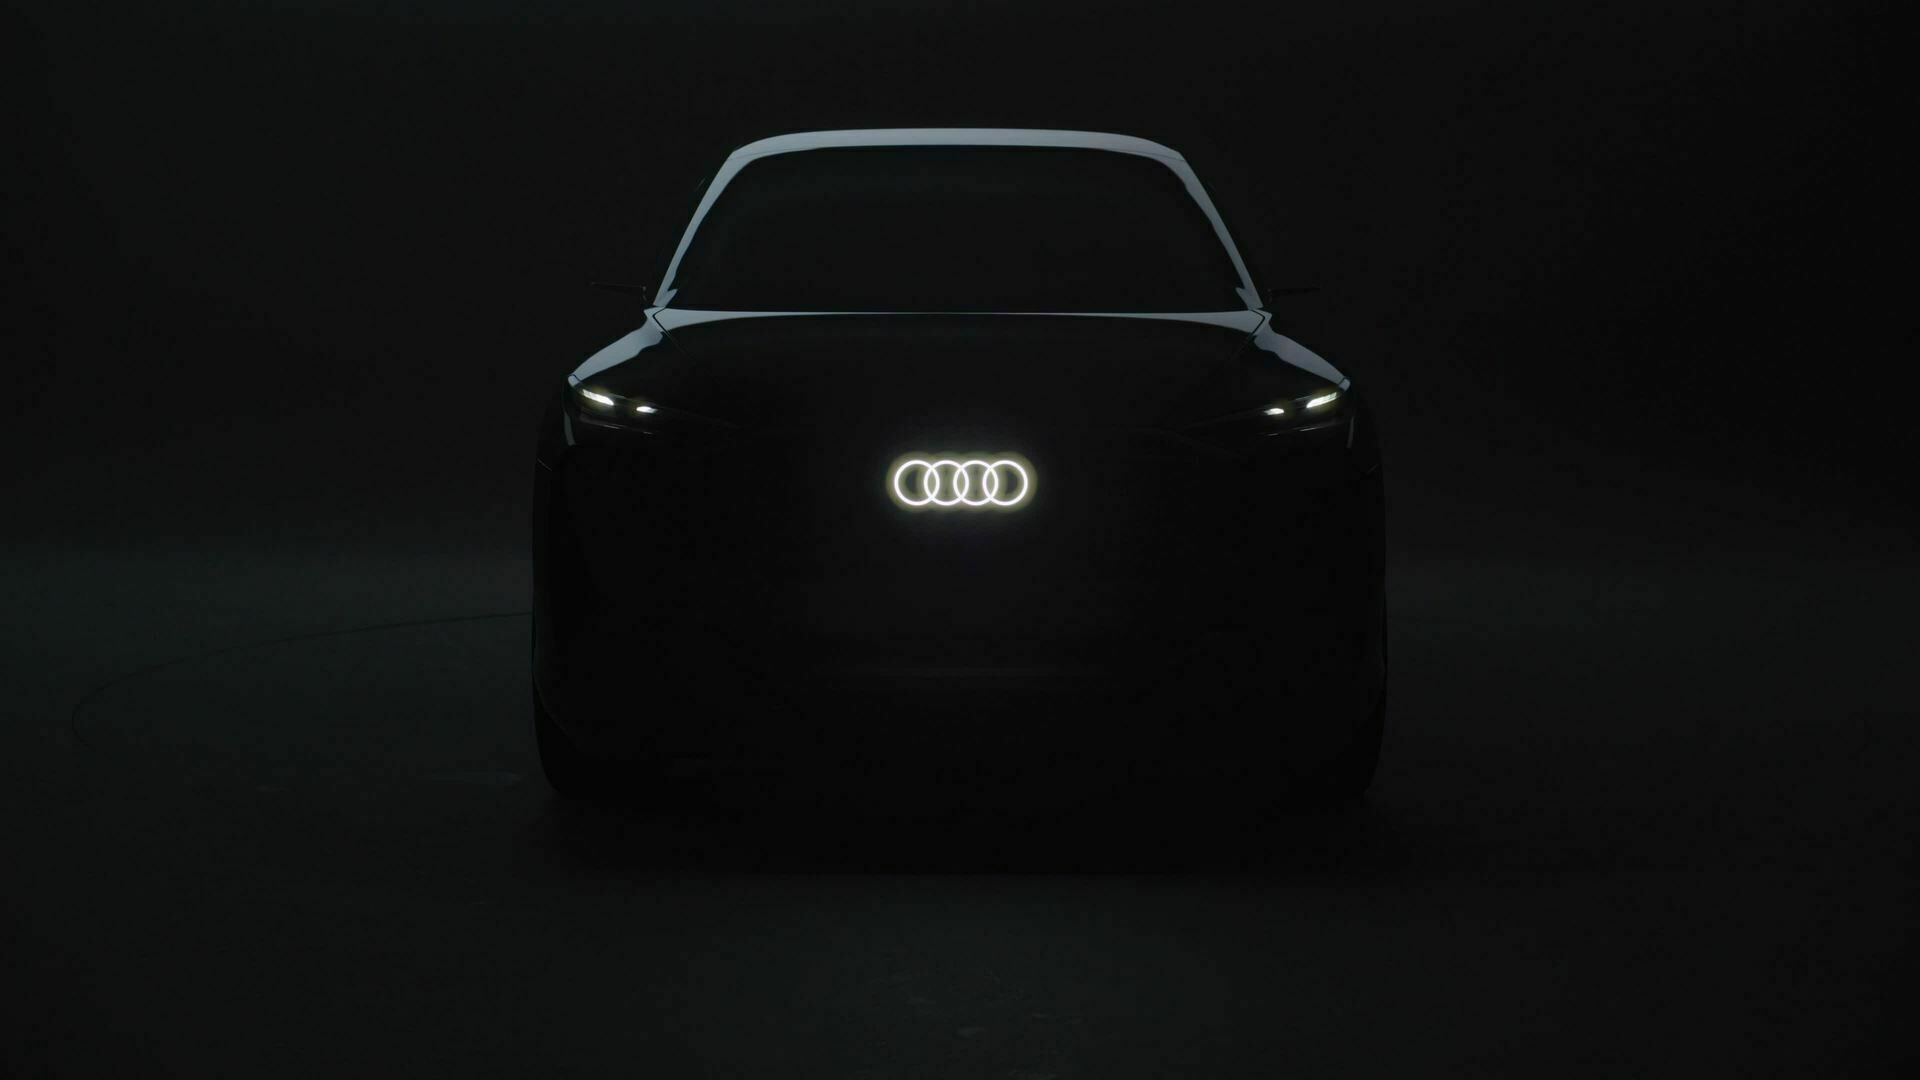 The design of the Audi urbansphere concept